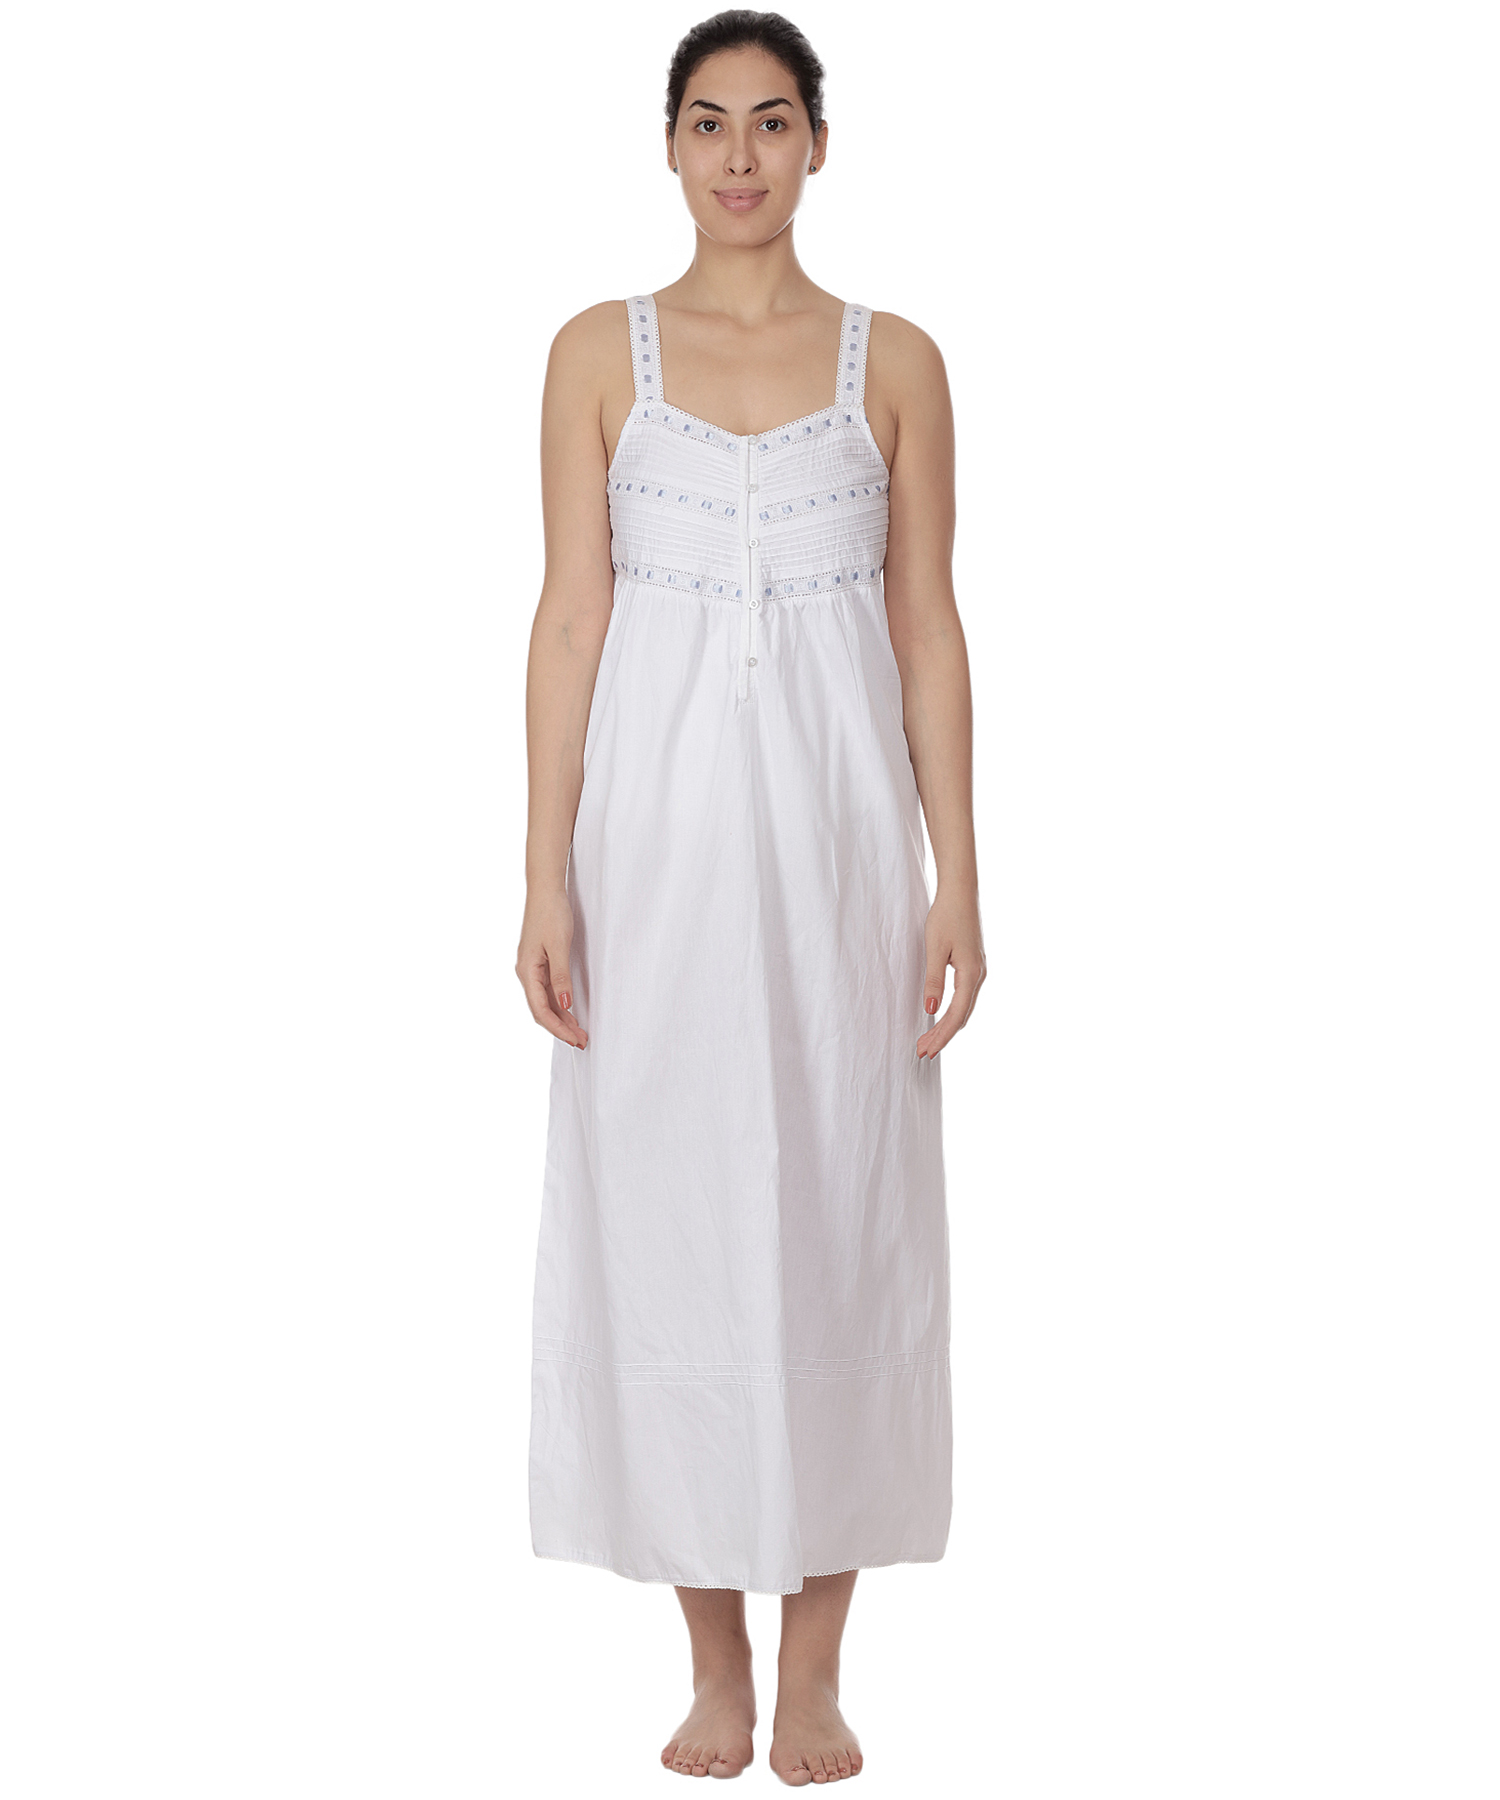 Classic White Cotton Sleeveless Nightdress Plus Size – Cotton Lane